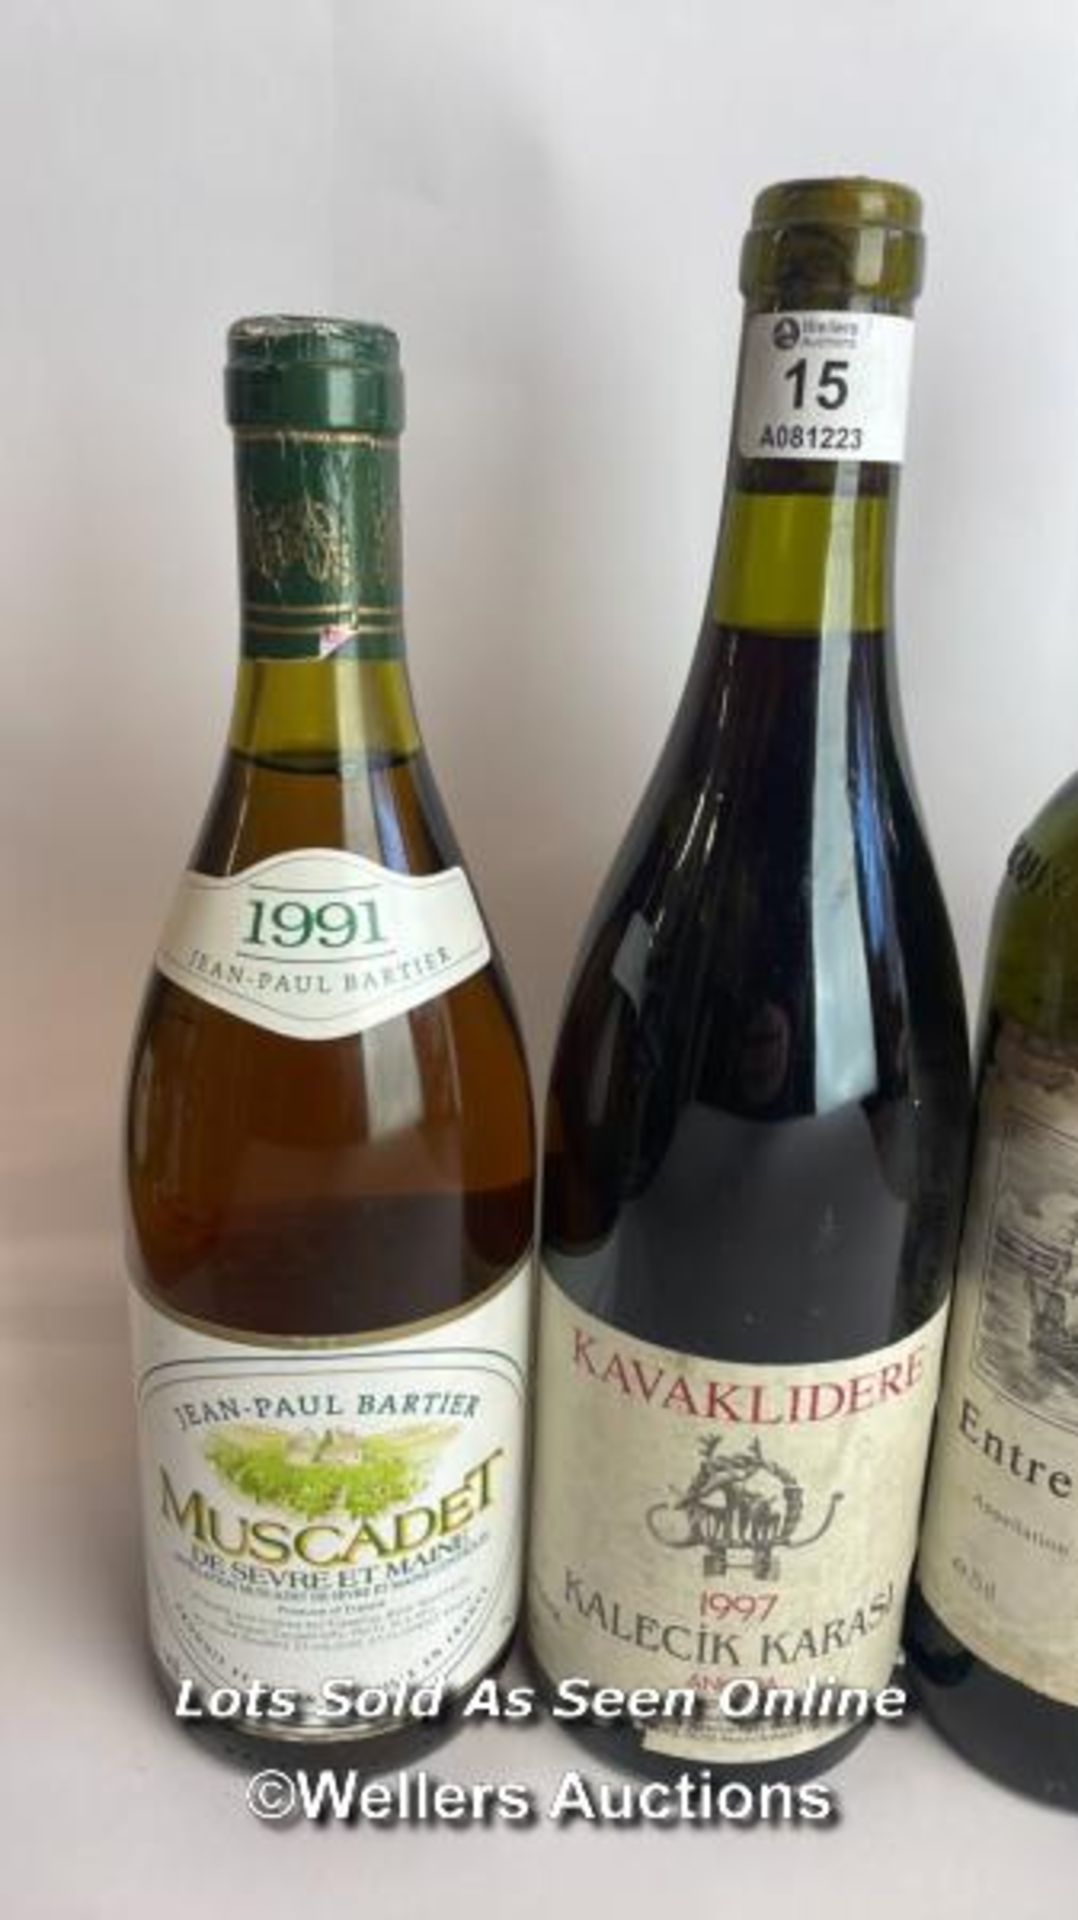 Four bottles of vintage wine Inc. 1997 Kavaklidere Kalecik Karasi, 1991 Jean-Paul Bartier Muscadet - Image 2 of 6